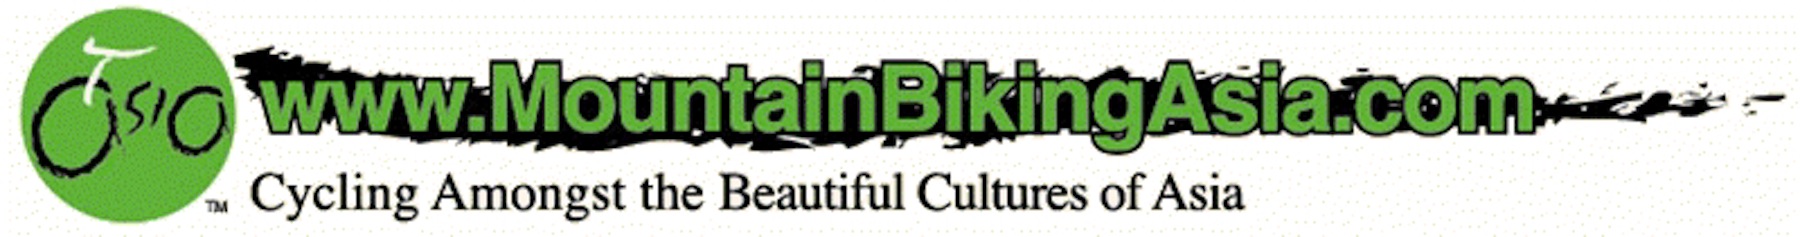 Mountinbikingasia.com logo. Green and Black colors